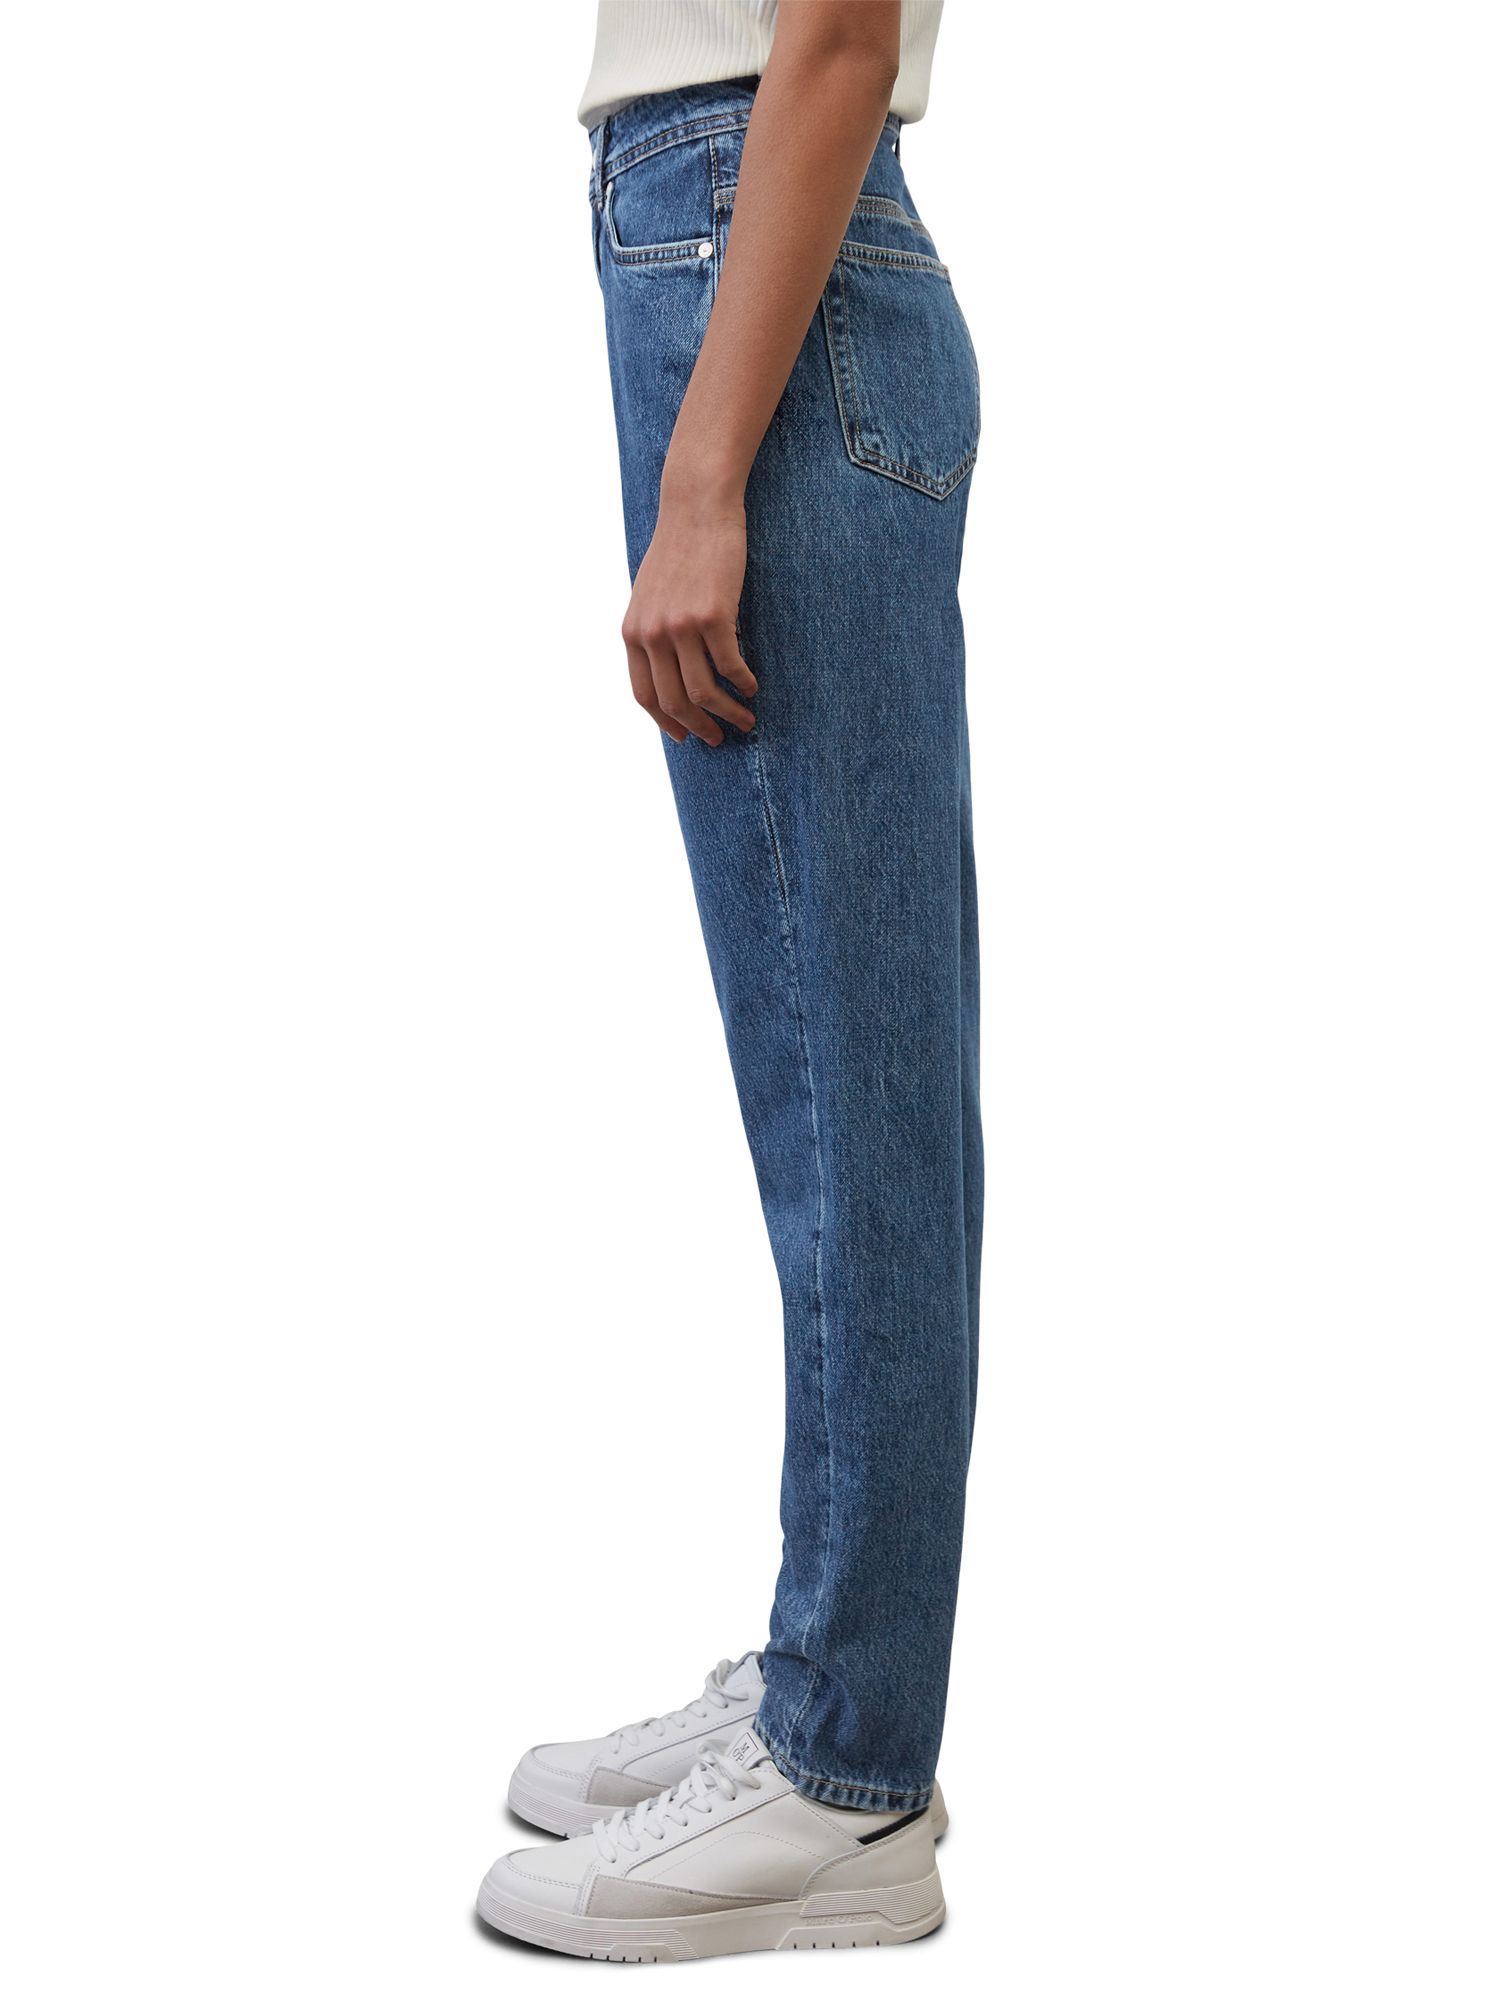 Marc O'Polo Denim Maja High Rise Jeans, Mid Blue, 29R